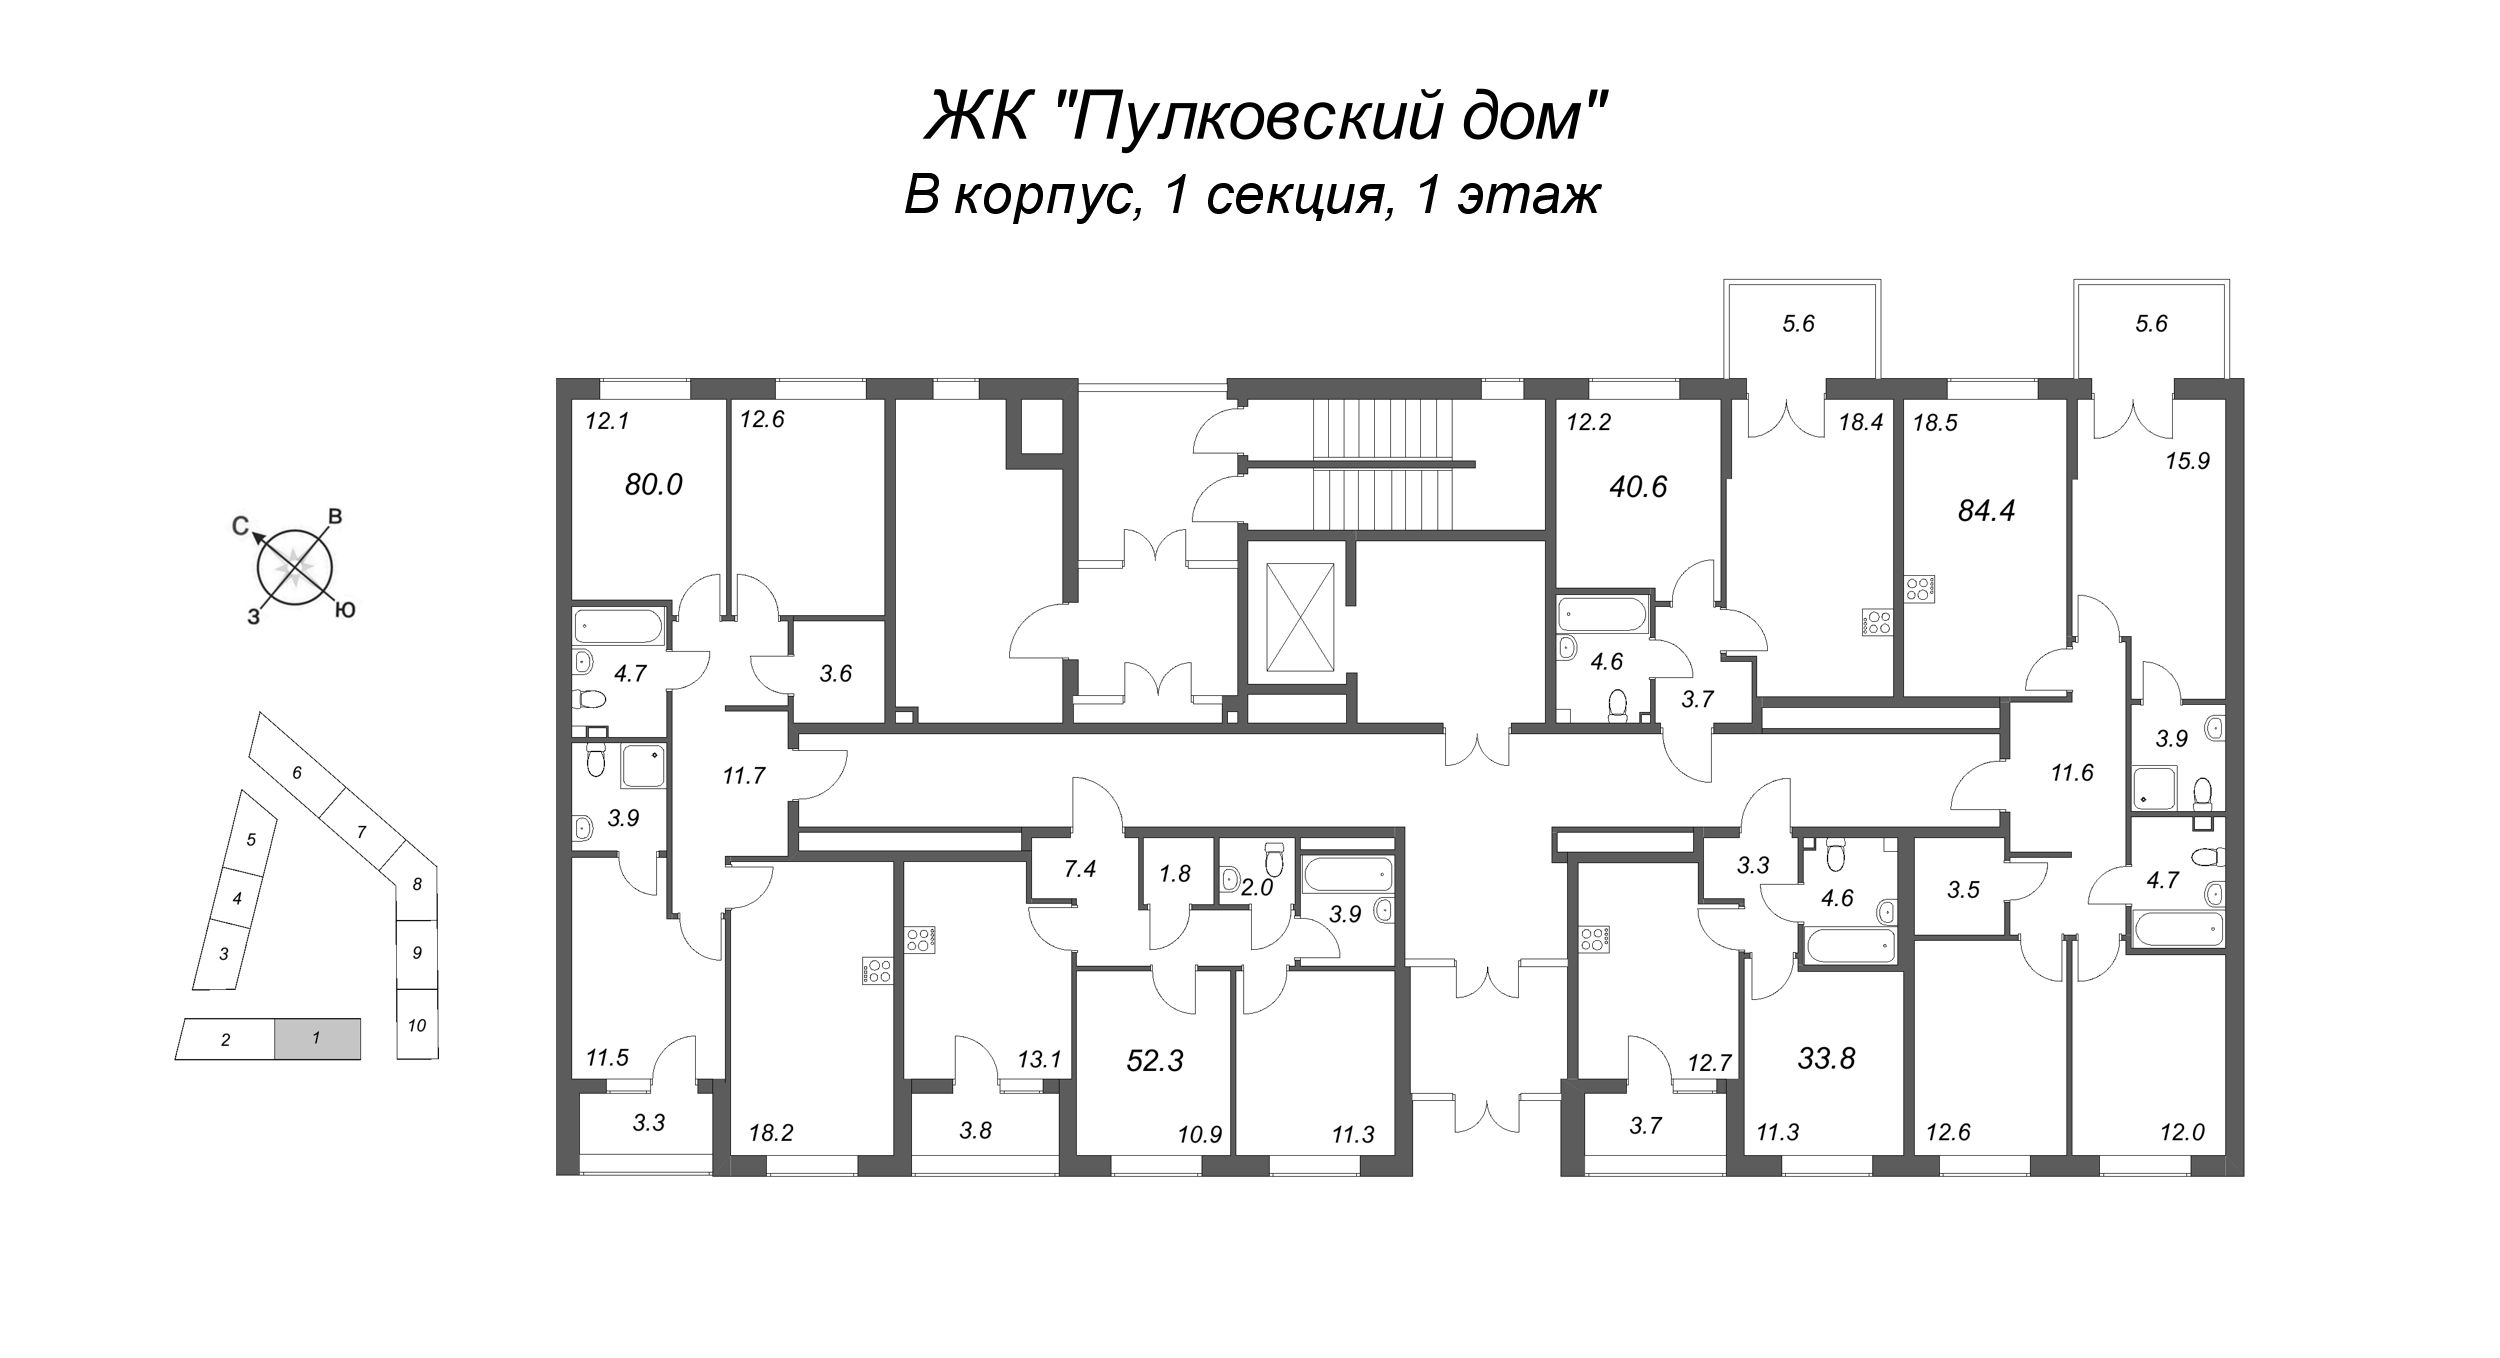 4-комнатная (Евро) квартира, 80 м² - планировка этажа